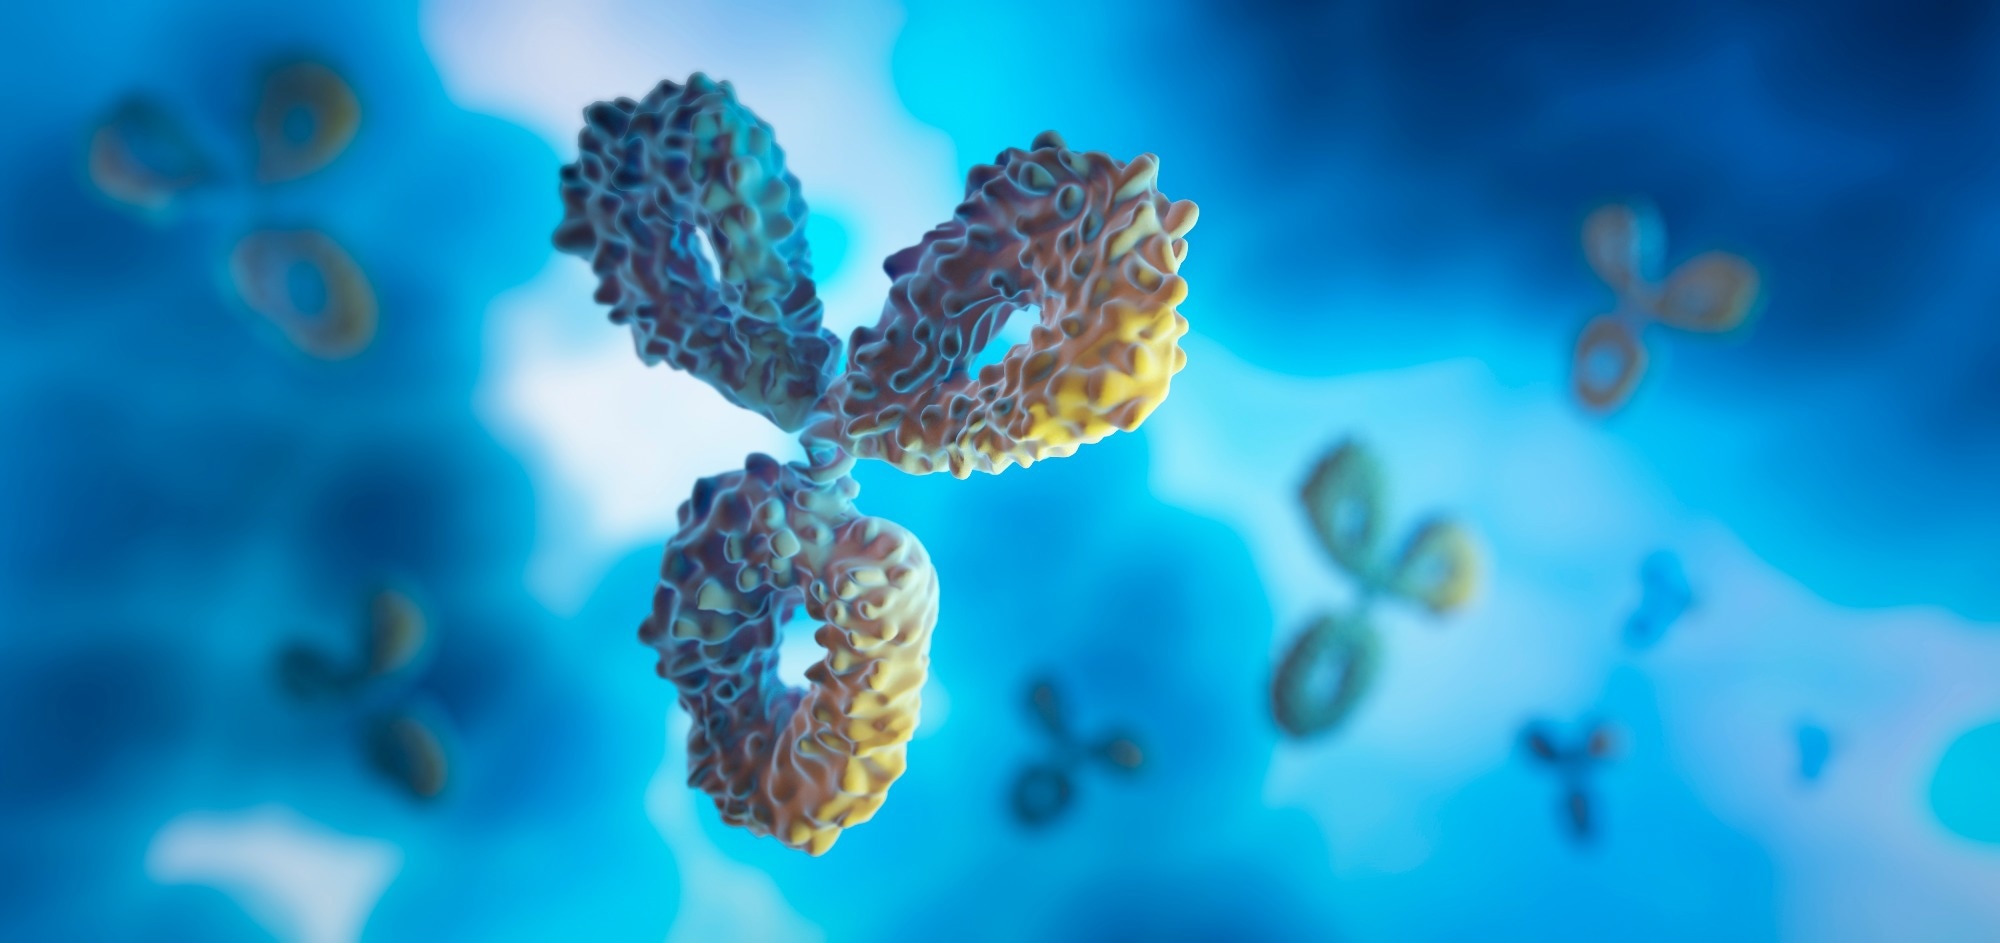 Adenovirus and mRNA COVID vaccines differ in 6-month antibody durability